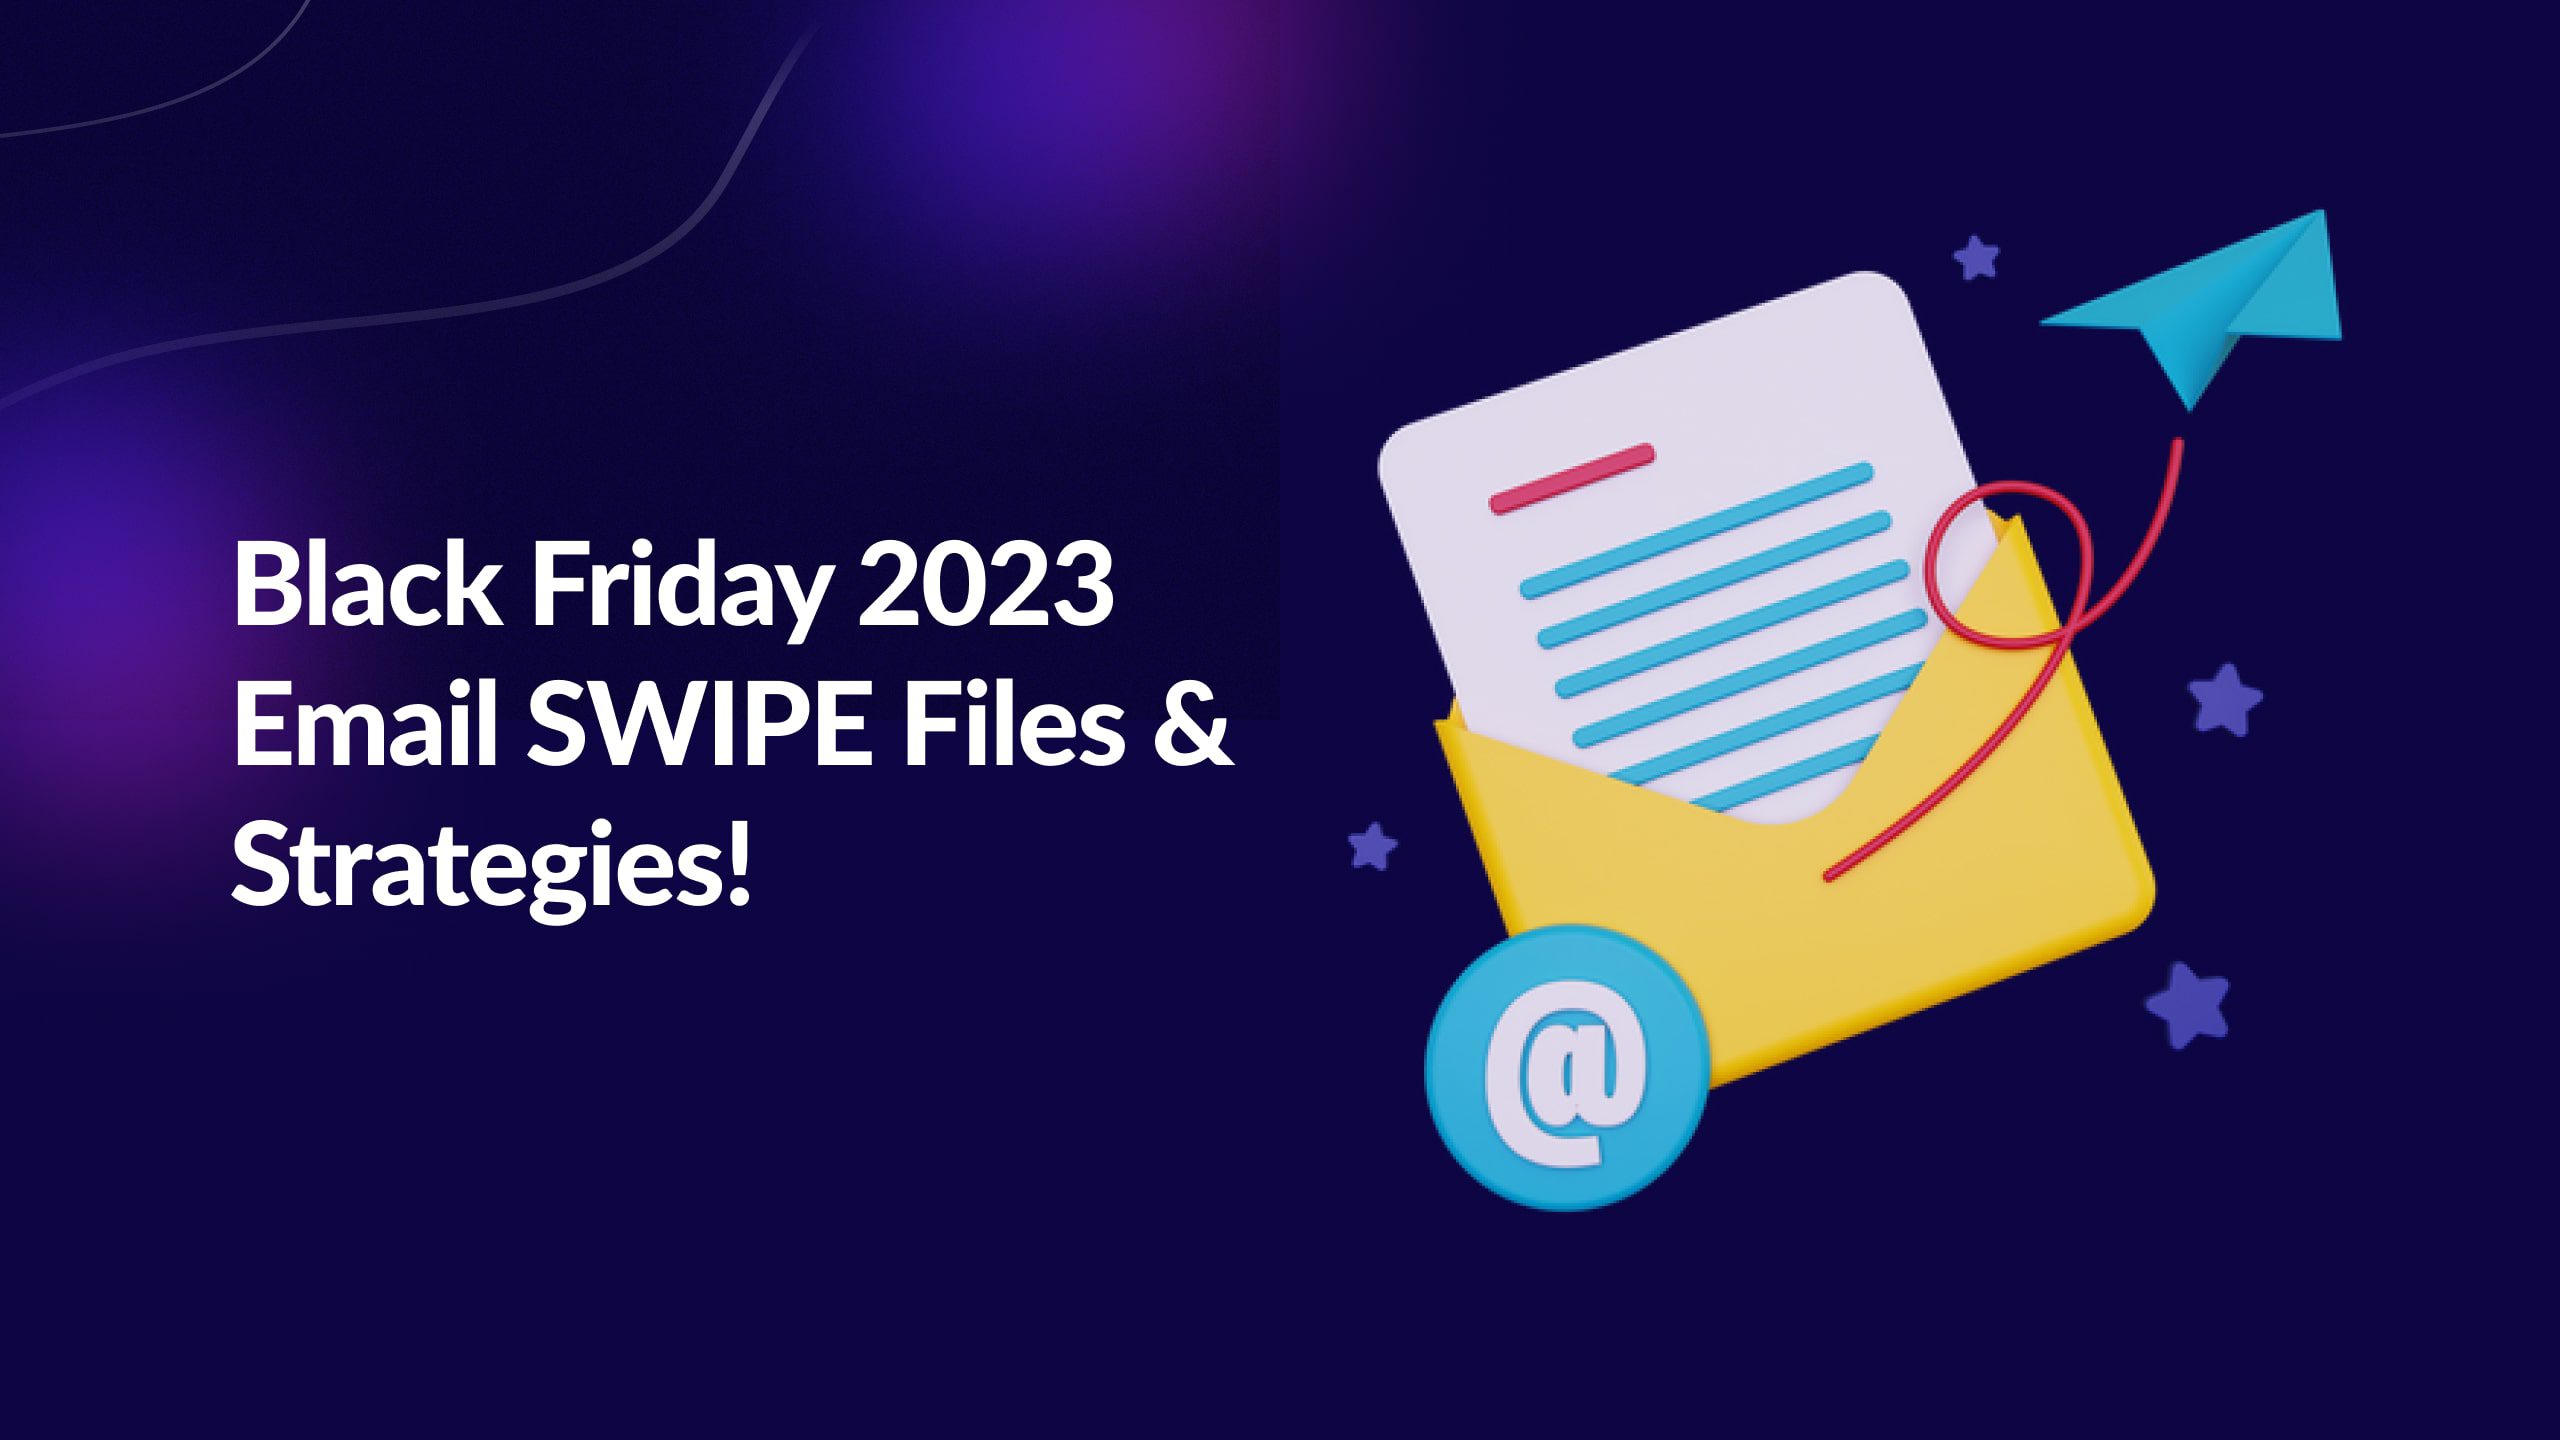 Black Friday 2023: SWIPE Files & Strategies